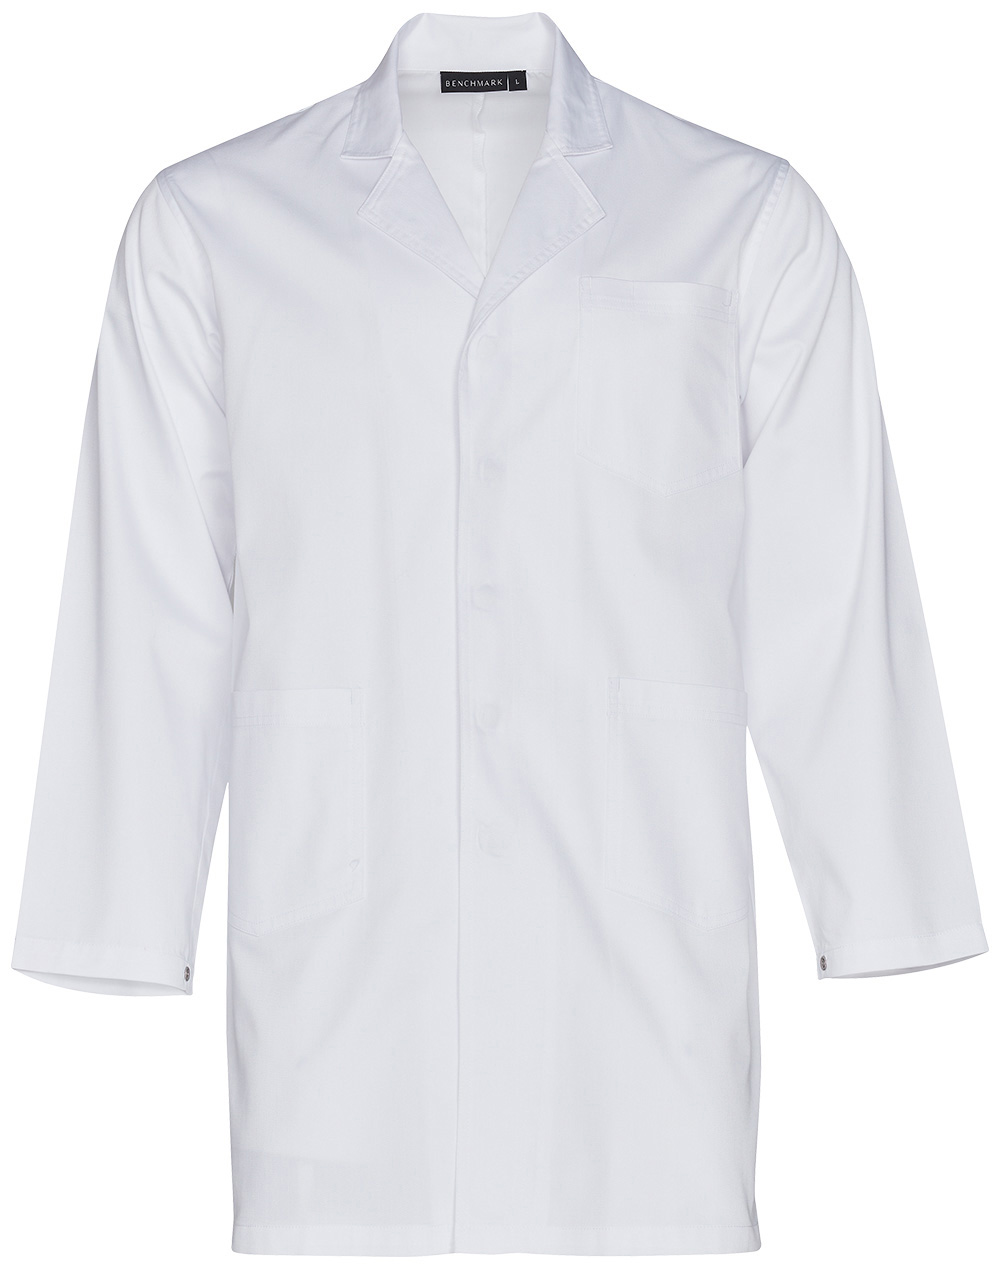 Order Unisex Long Sleeve Lab Coat Online in Australia